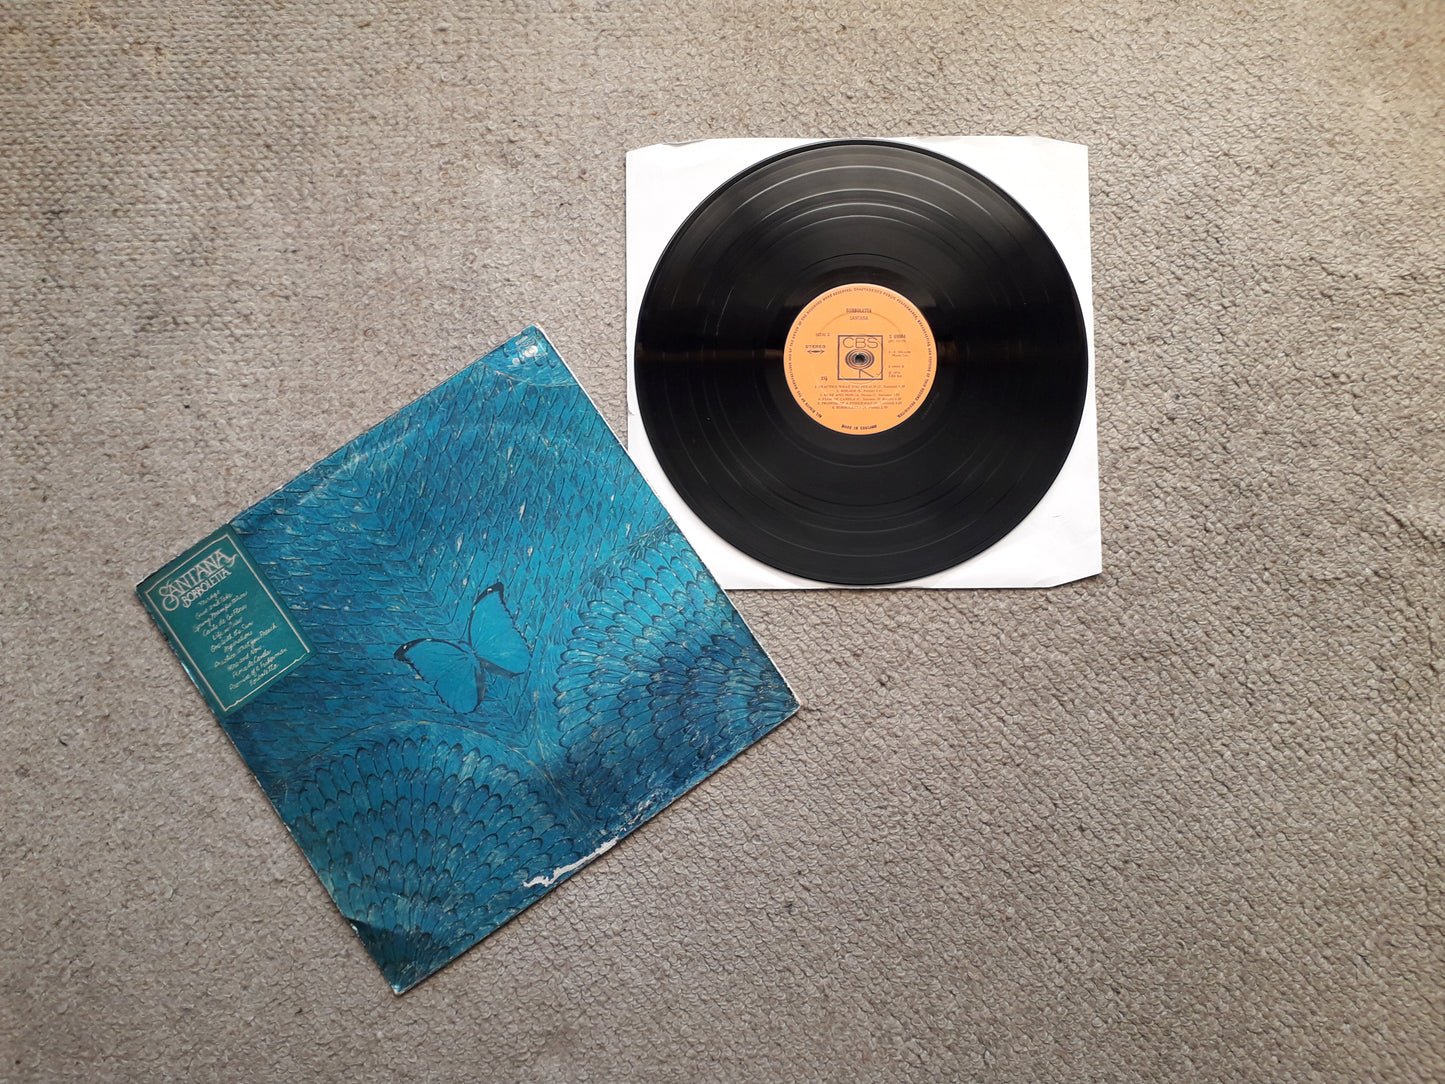 Santana-Borboletta LP (S 69084) metallic foil sleeve with sticker